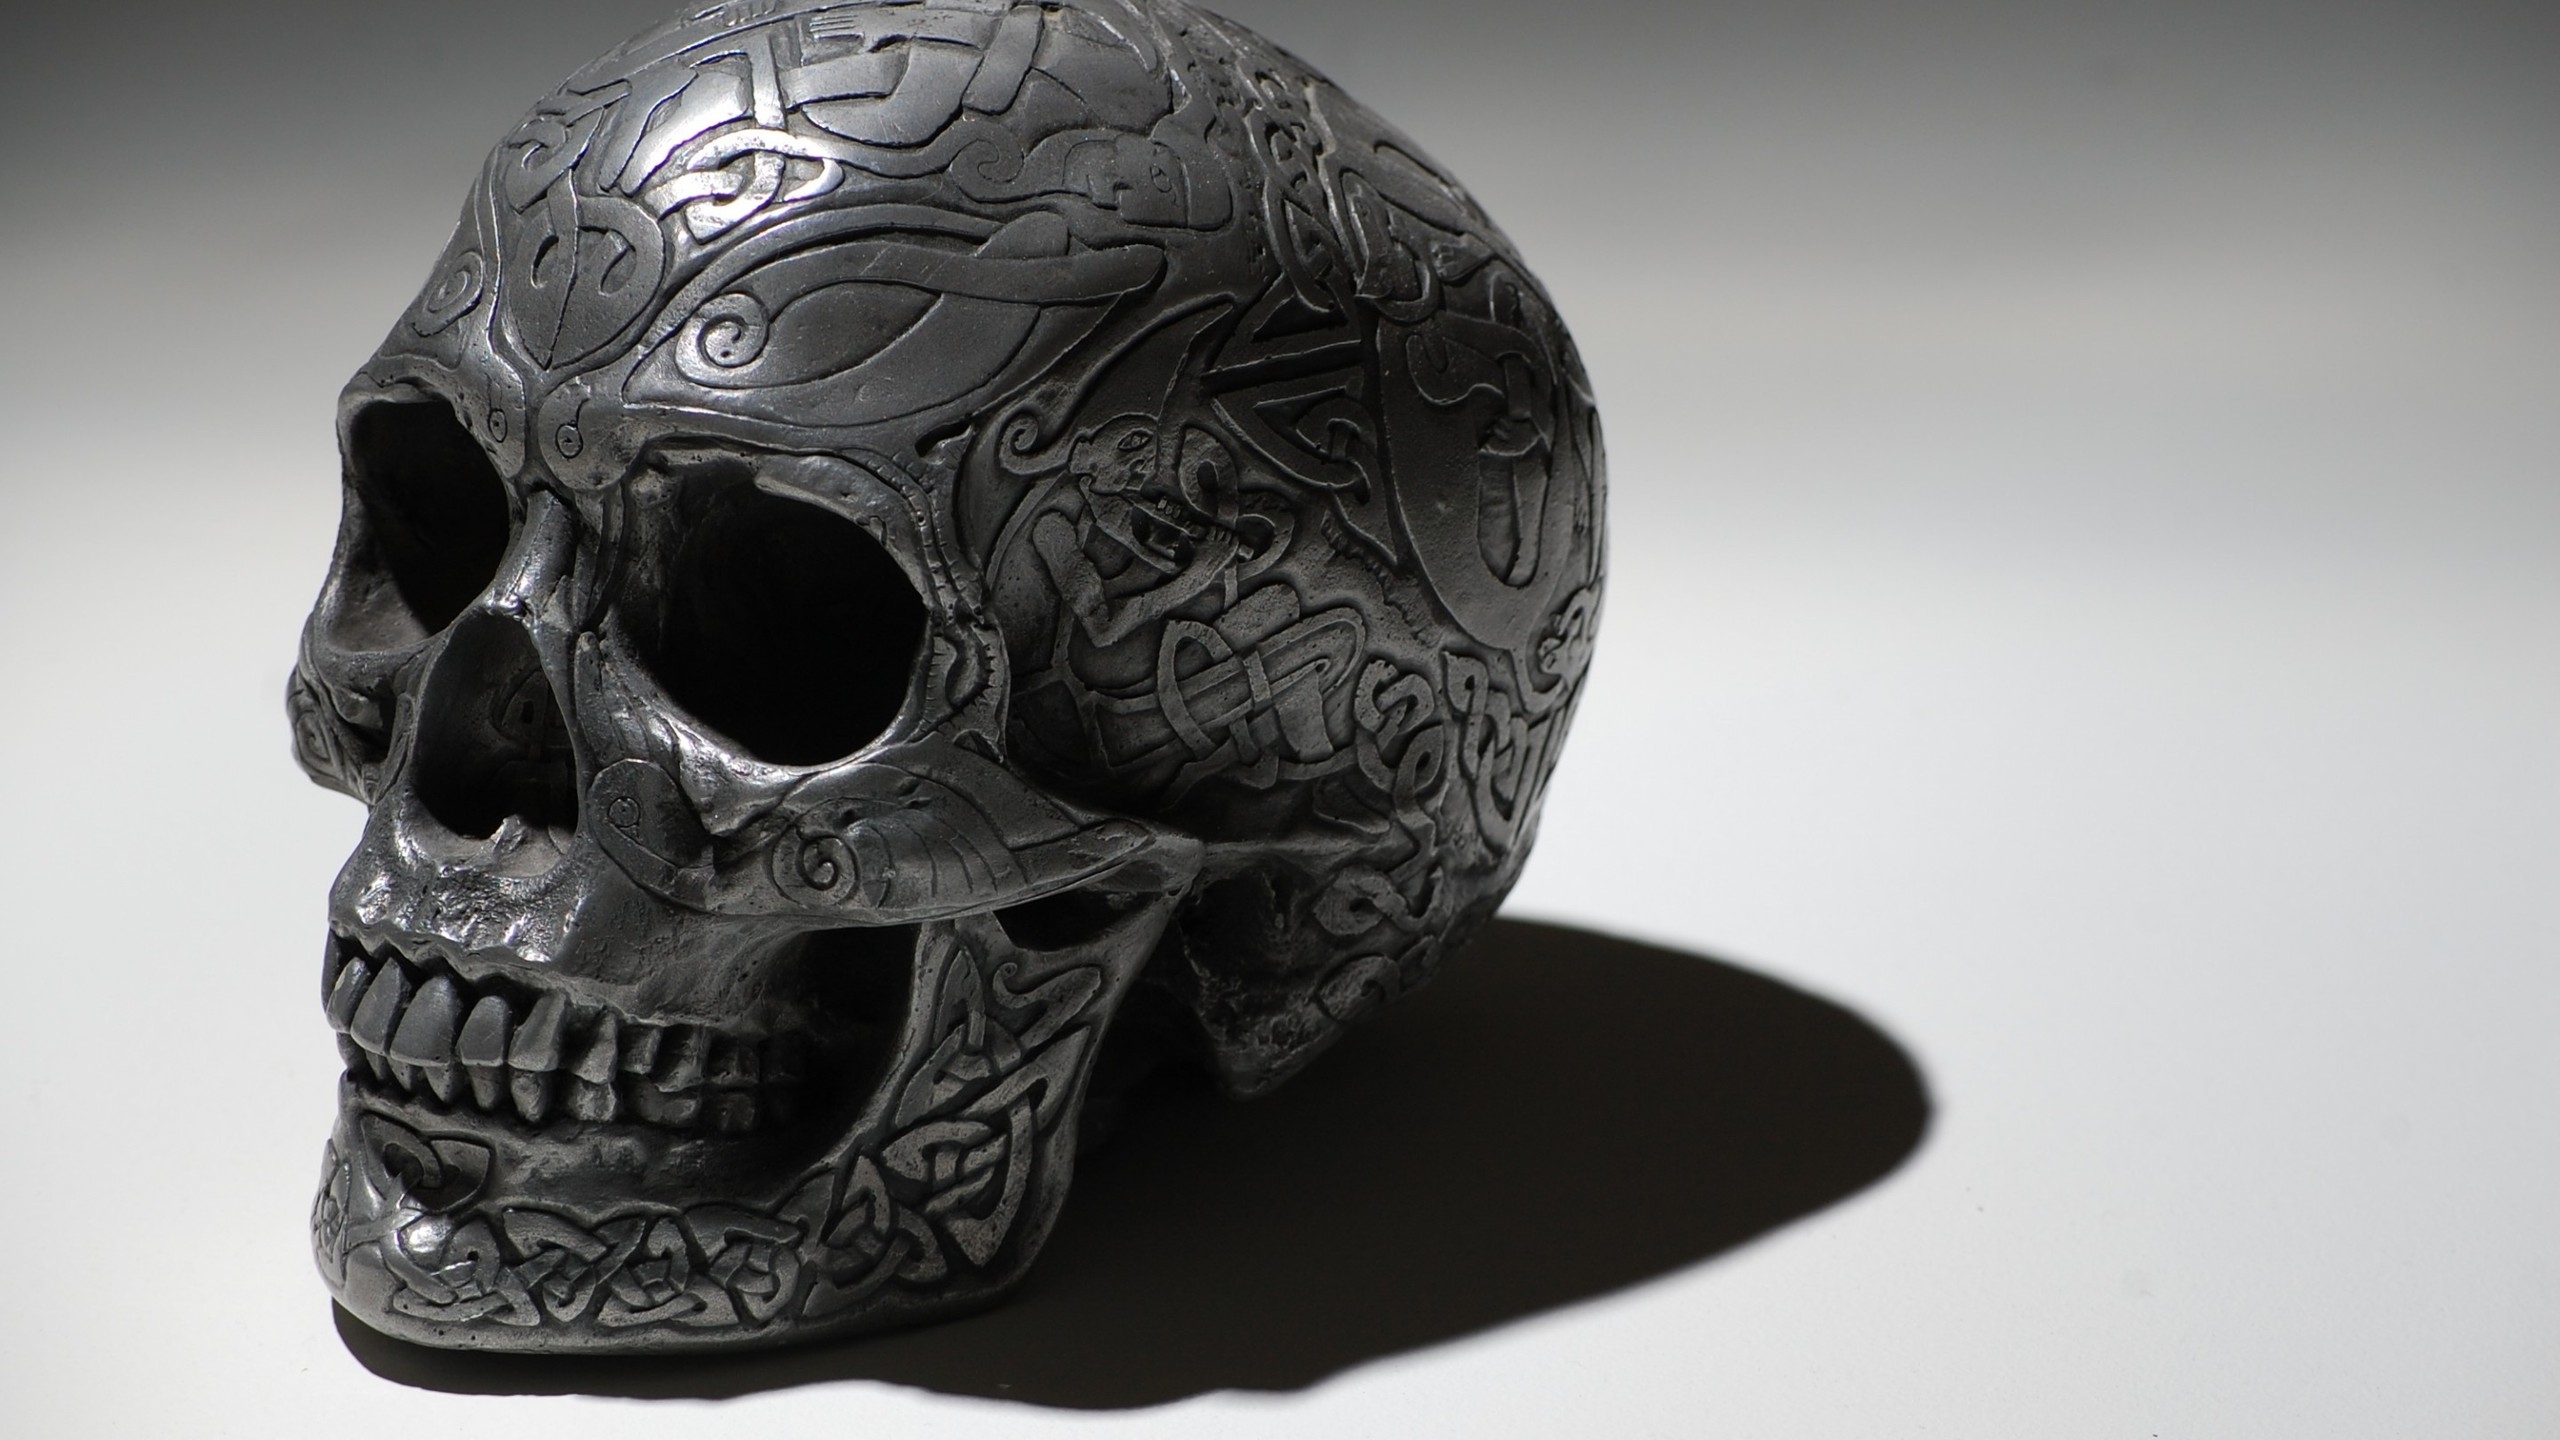 Metal Skull for 2560x1440 HDTV resolution